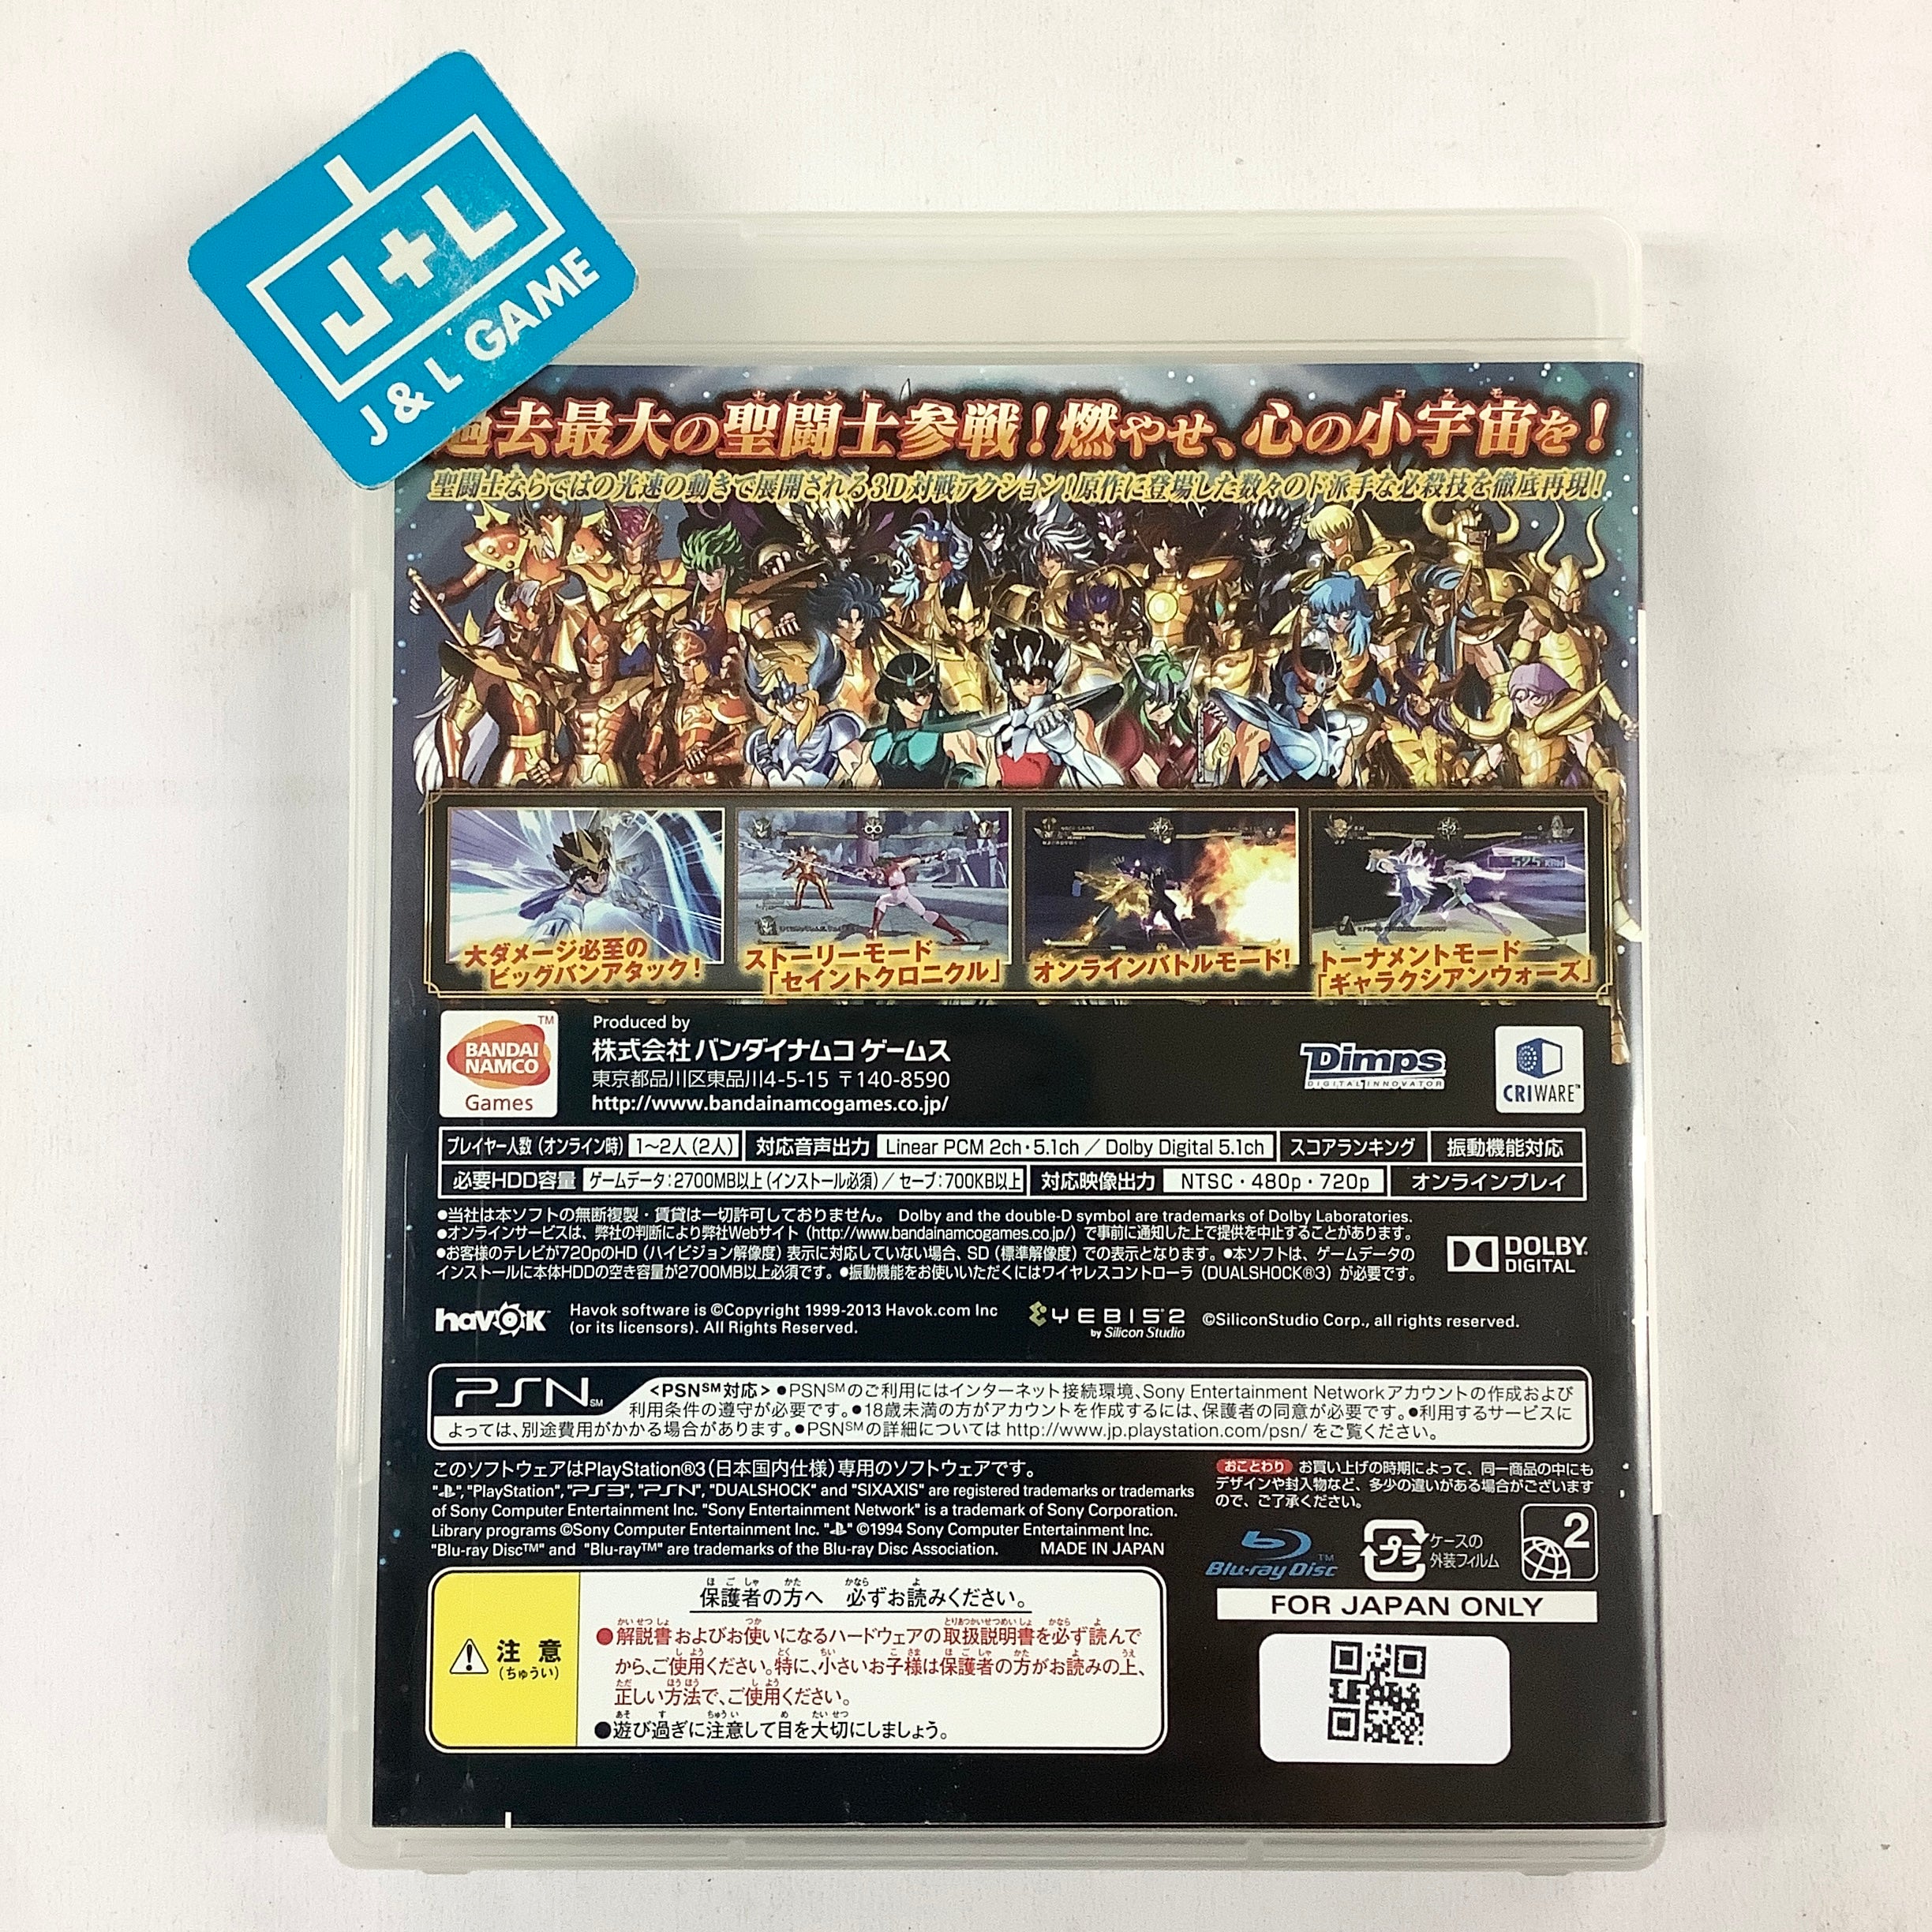 Saint Seiya: Brave Soldiers (Pegasus Box) - (PS3) PlayStation 3 [Pre-Owned] (Japanese Import) Video Games BANDAI NAMCO Entertainment   